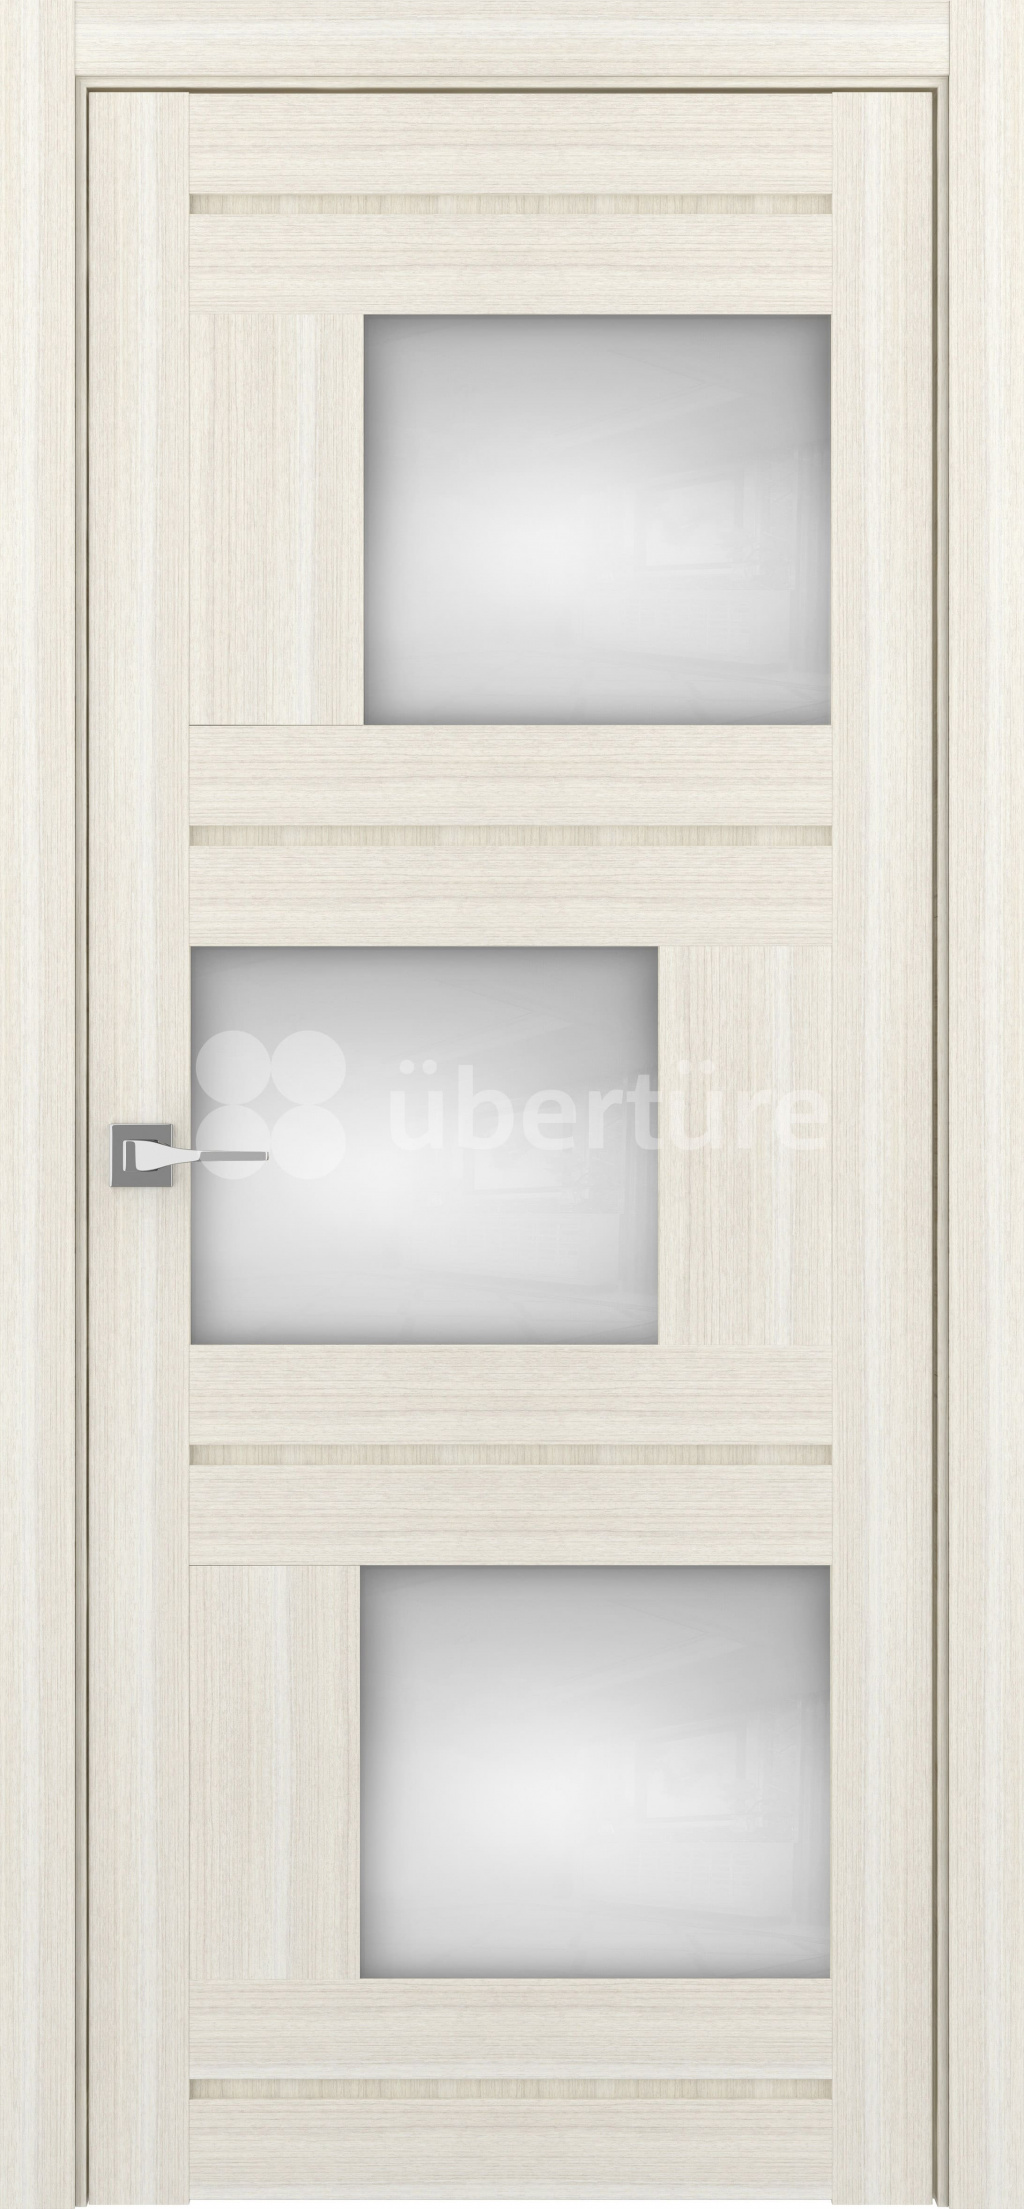 Uberture Межкомнатная дверь Light ПДО 2181, арт. 17436 - фото №4